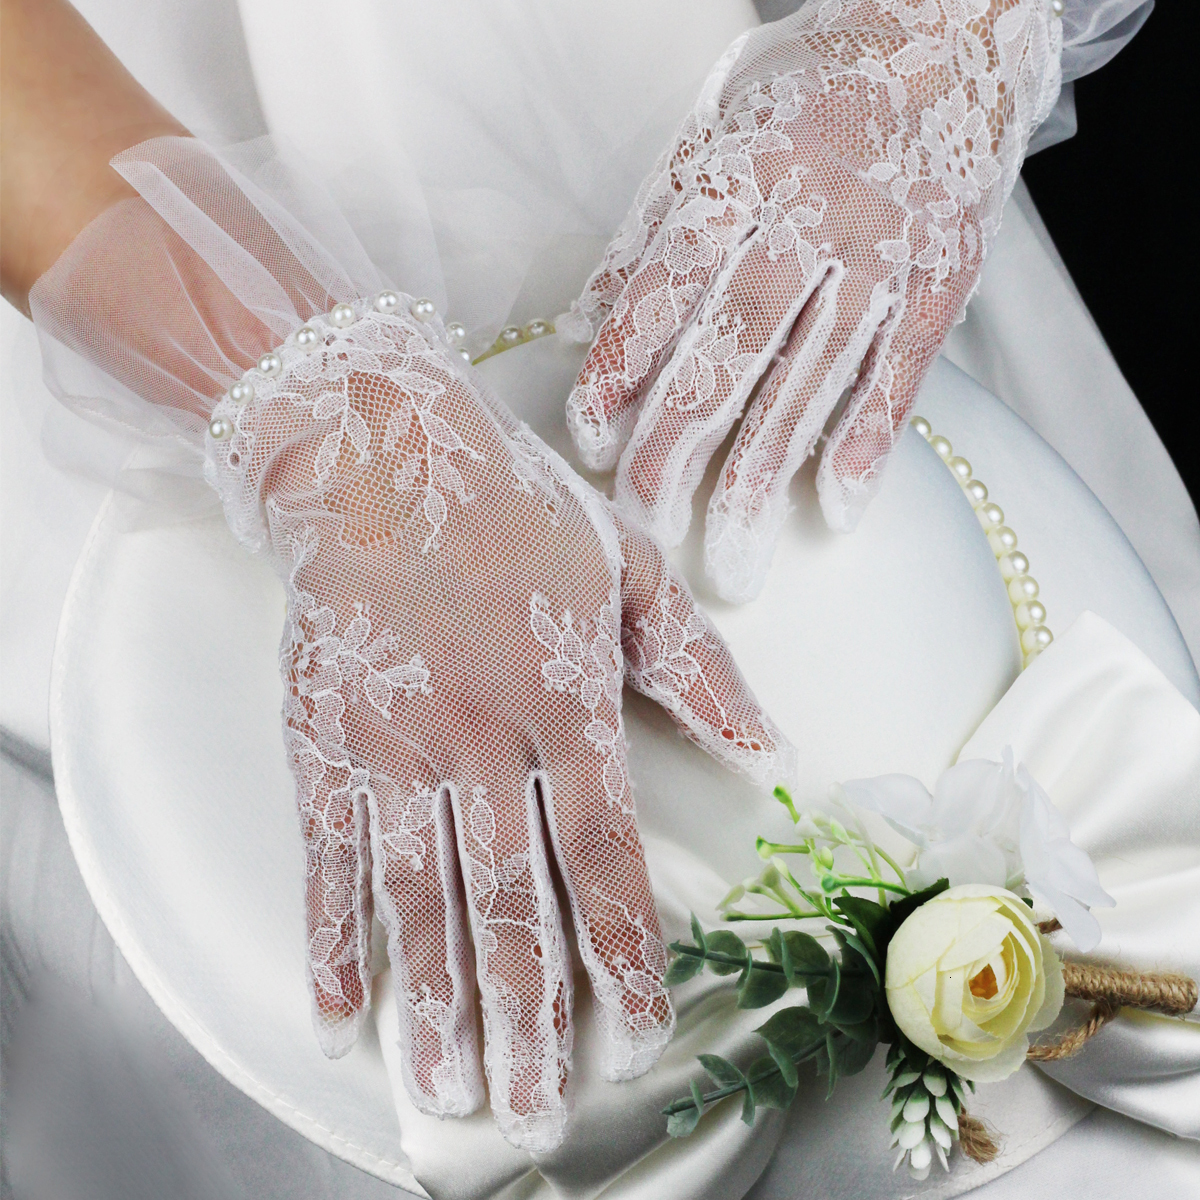 

Five Fingers Gloves WG048 Exquisite Wedding Bridal Short White Lace Pearls Ruffle Edge Women Ladies Bride Bridesmaid Finger Wrist Handschuh 230225